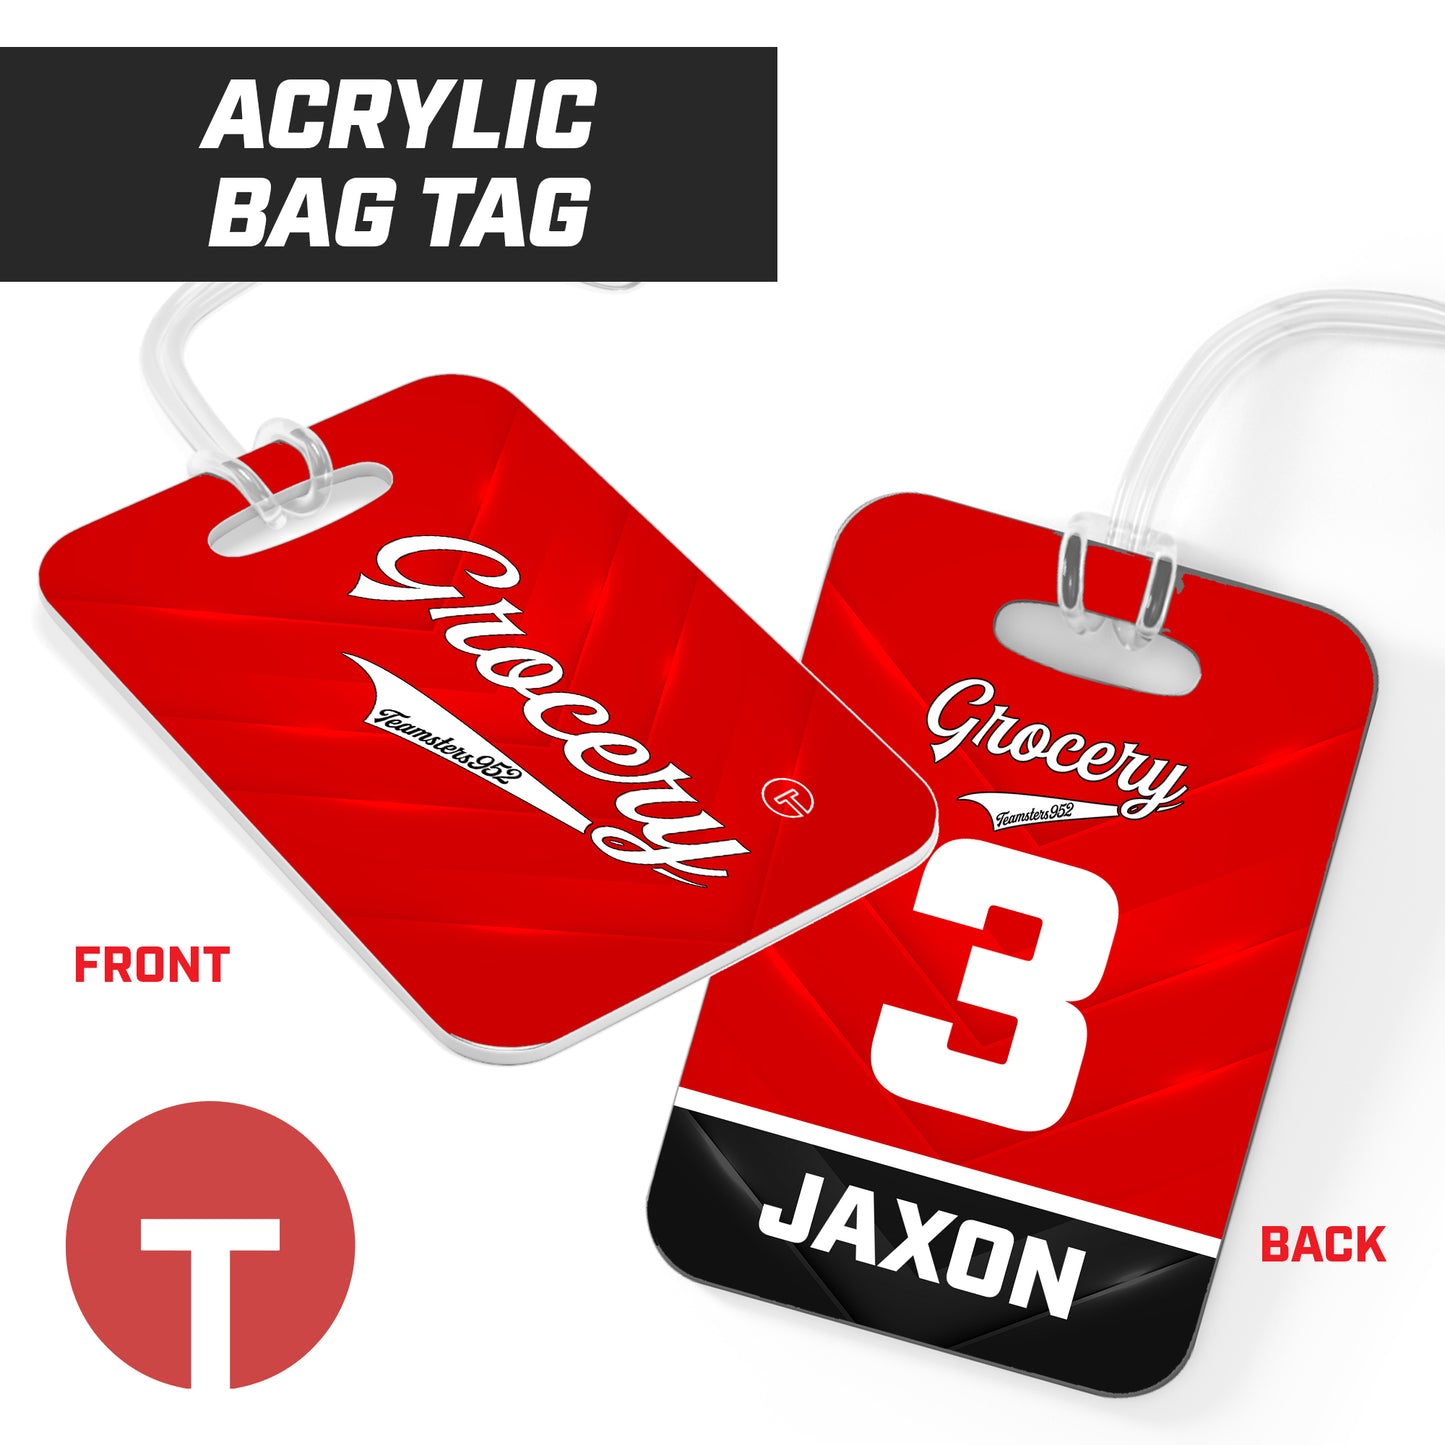 Grocery - Teamsters - Hard Acrylic Bag Tag